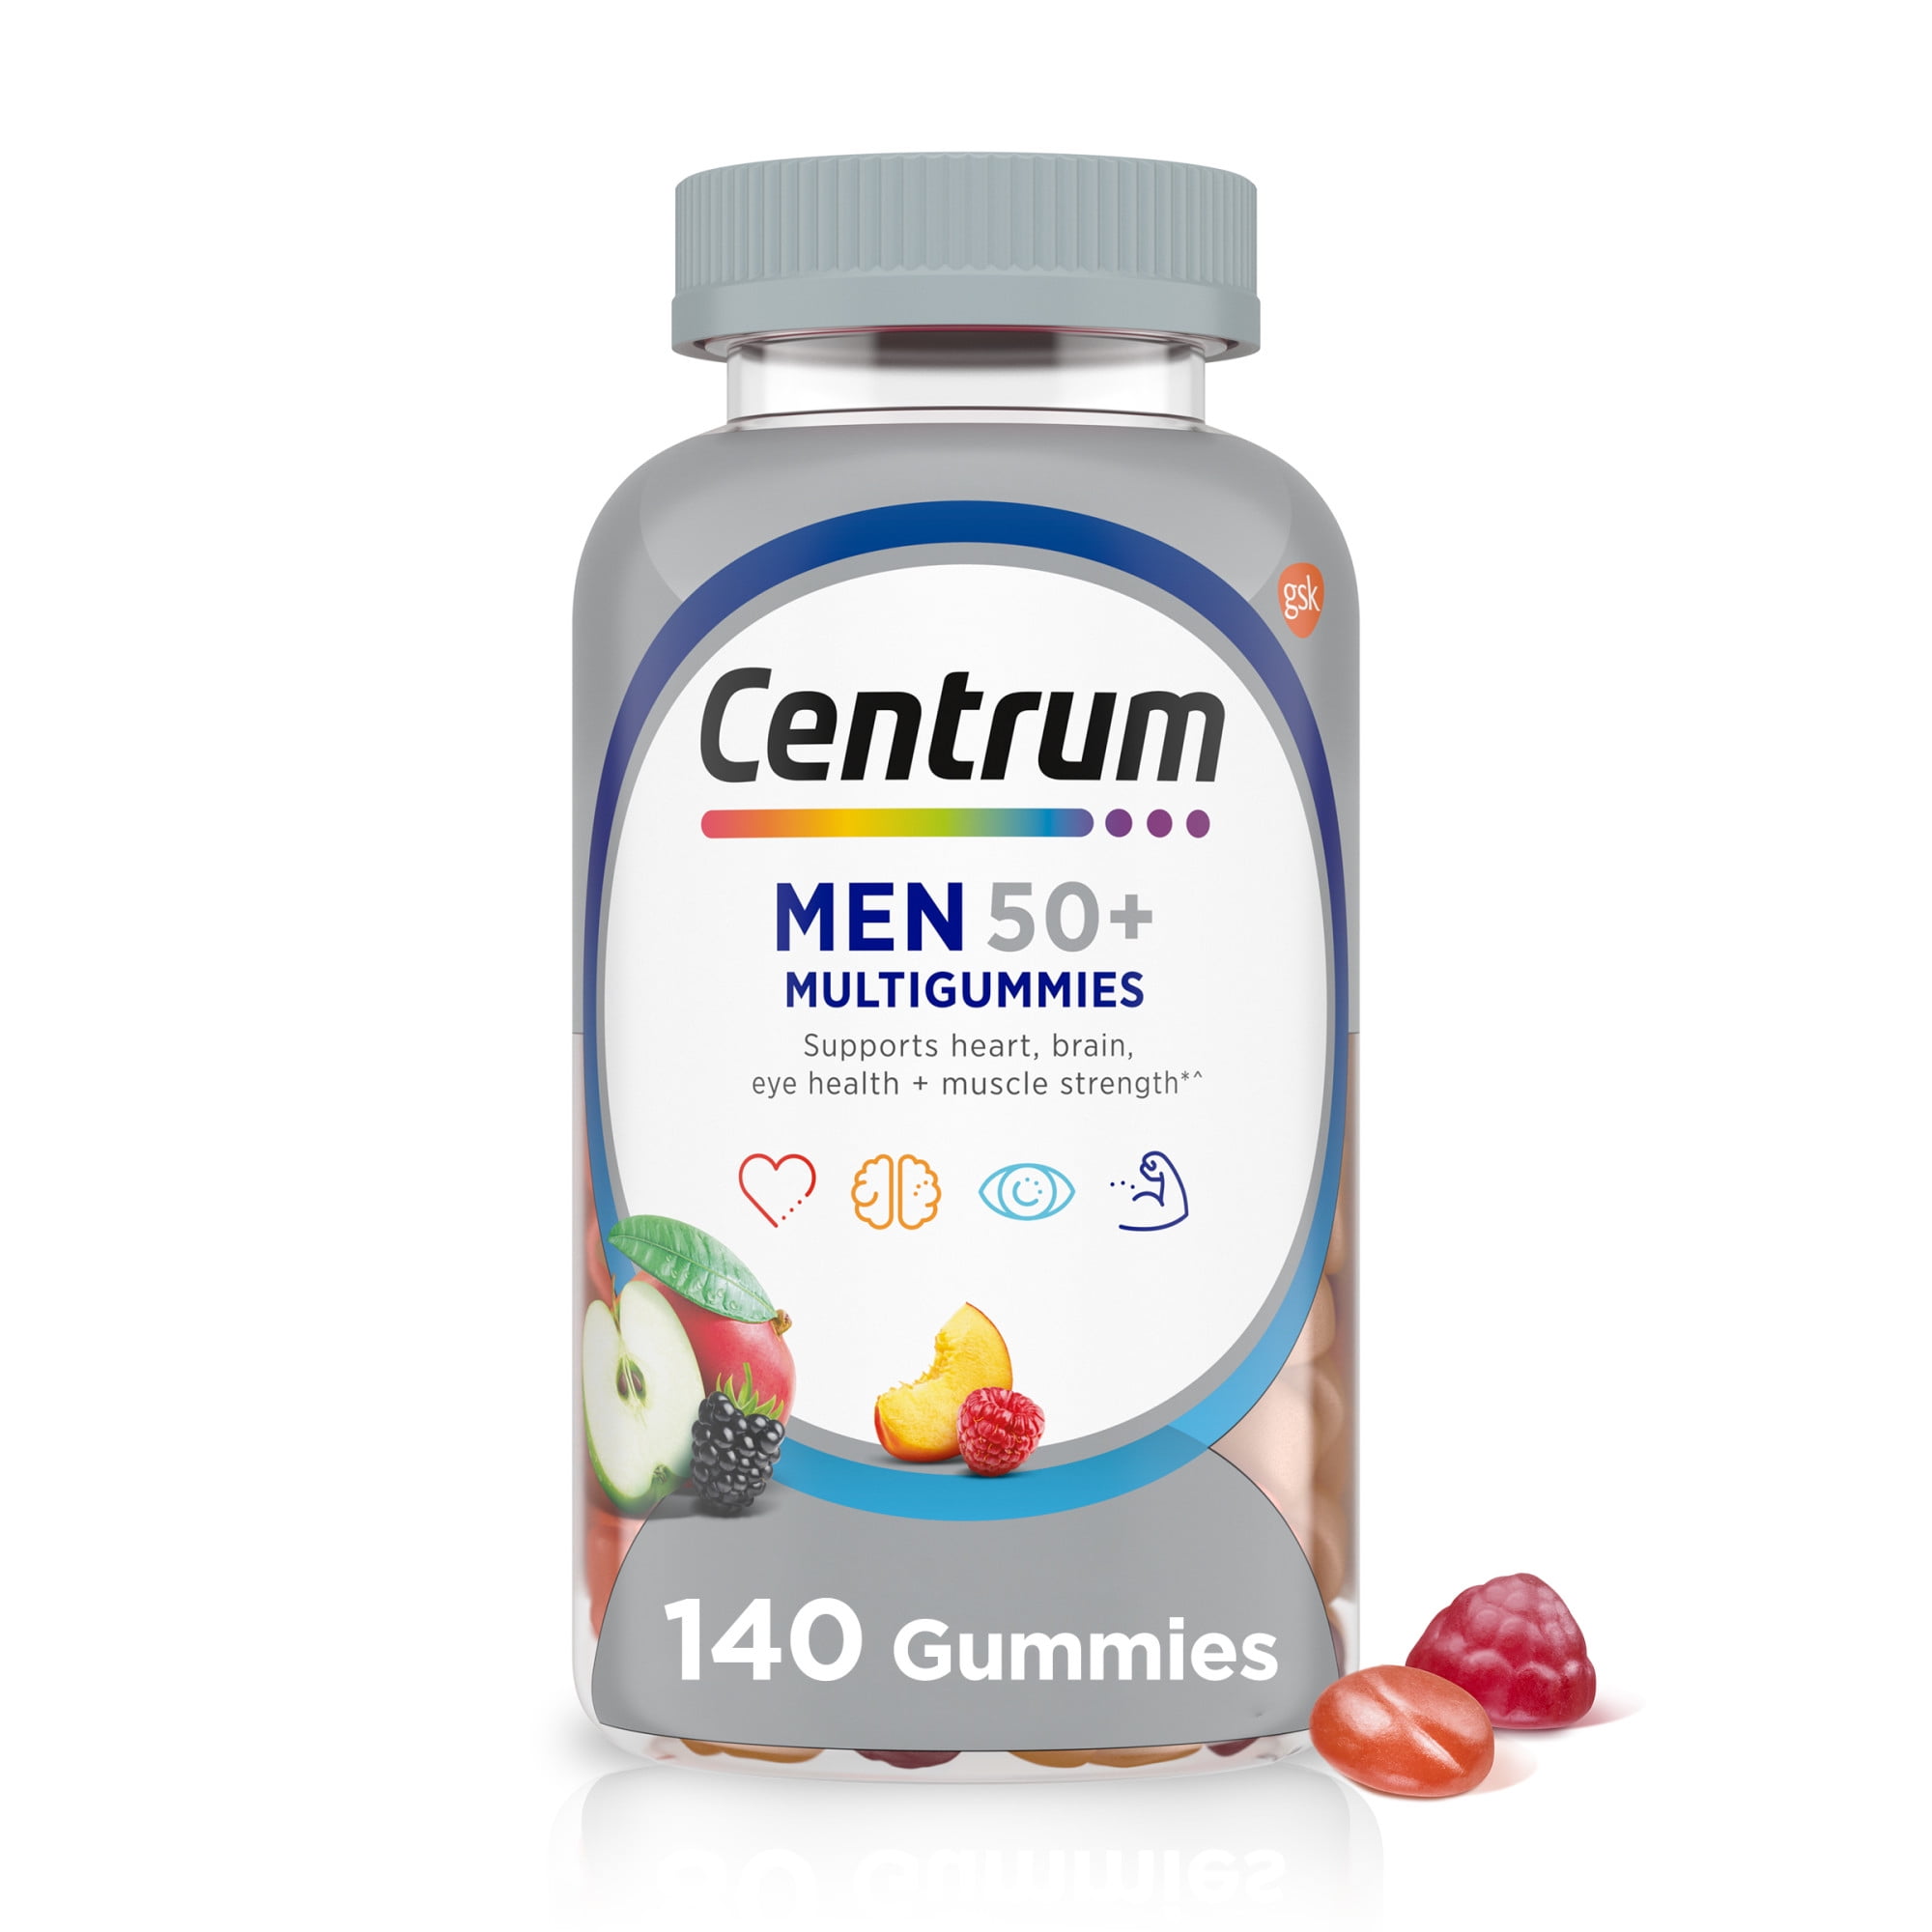 Centrum Multigummies for Men 50 Plus, Multivitamin/Multimineral Supplement With Vitamins D3, E, B6, and B12, Assorted Fruit Flavor - 140 Count